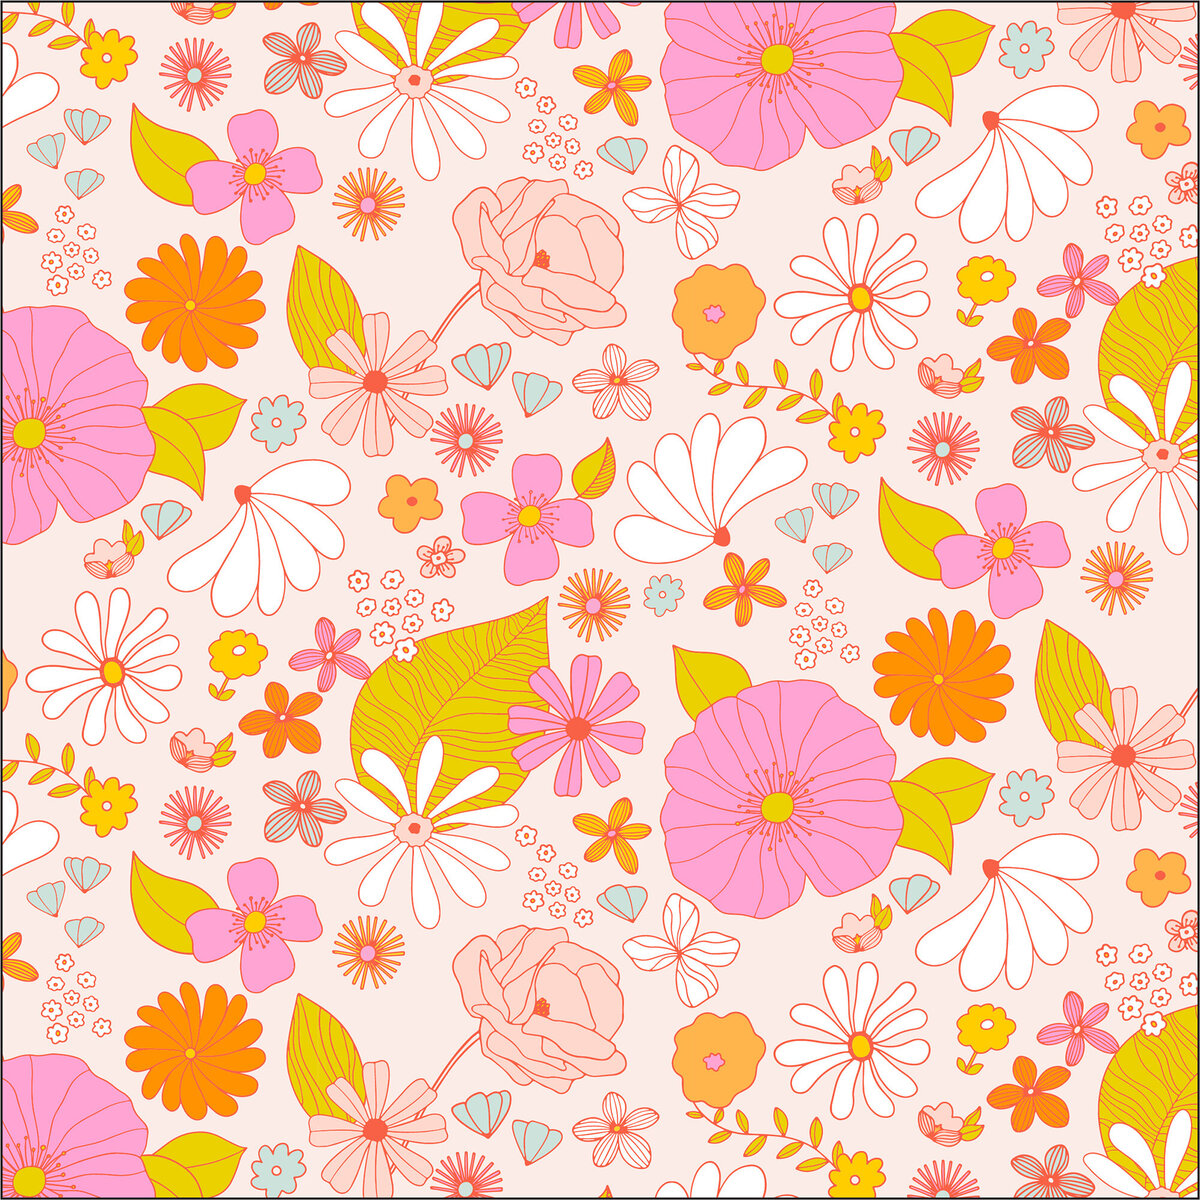 Groovy-Florals-Pattern-web